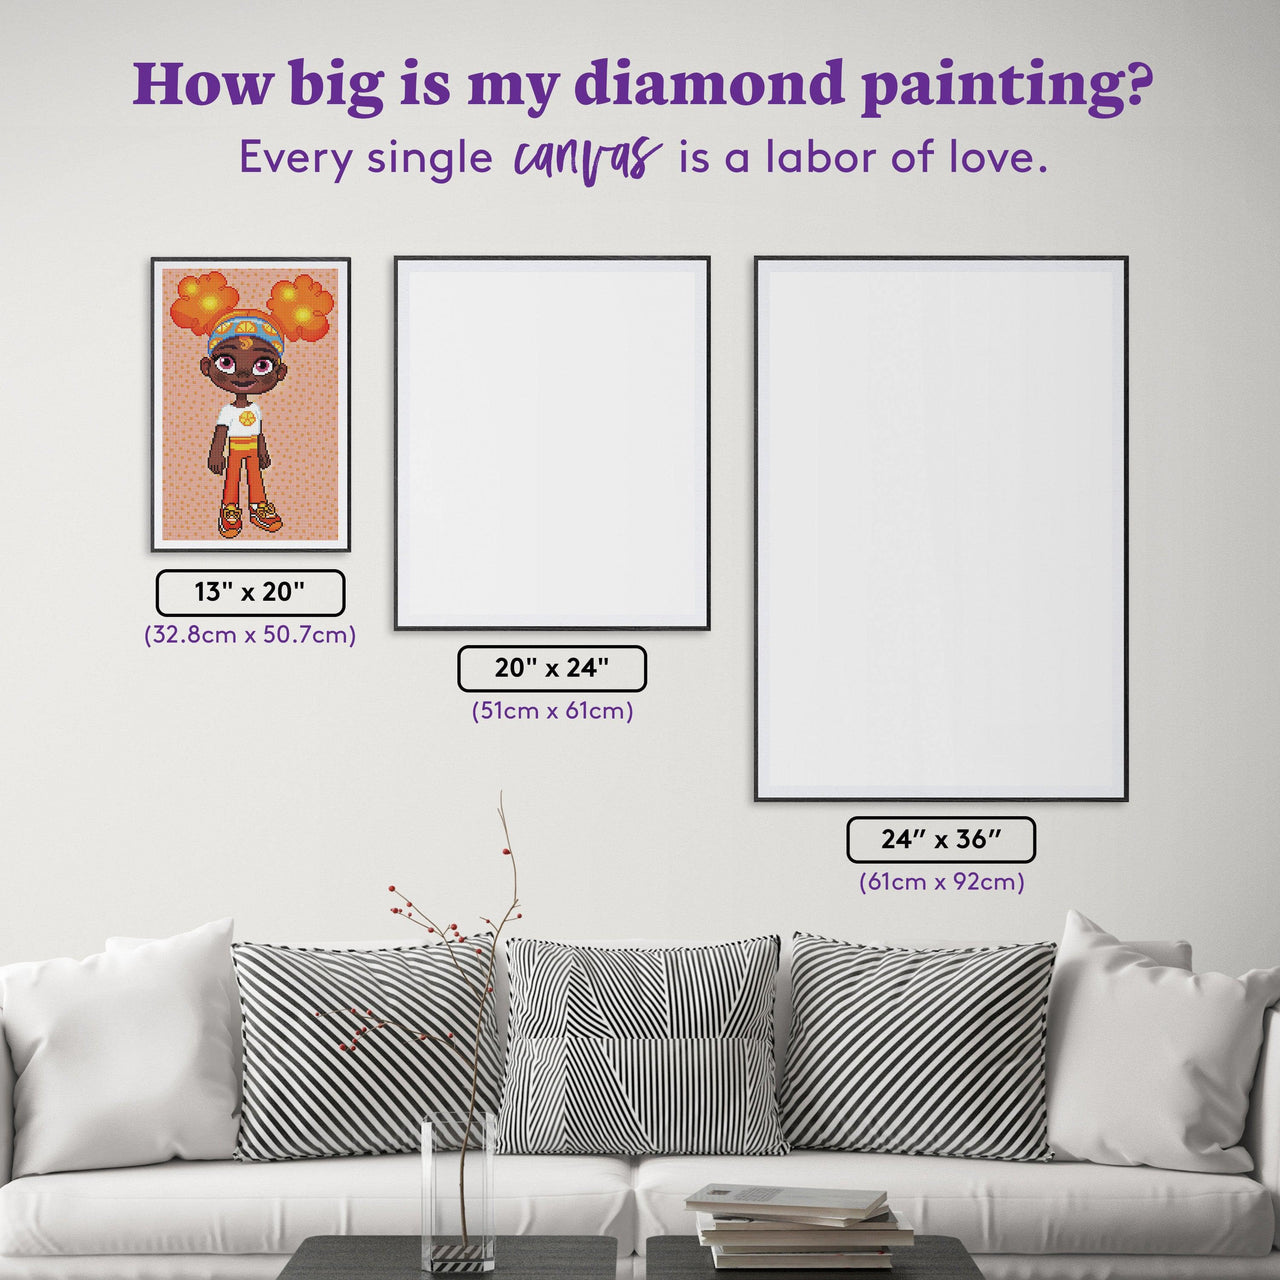 Diamond Painting Orange Blossom 13" x 20" (32.8cm x 50.7cm) / Round with 20 Colors including 1 AB Diamonds and 1 Fairy Dust Diamonds / 21,177